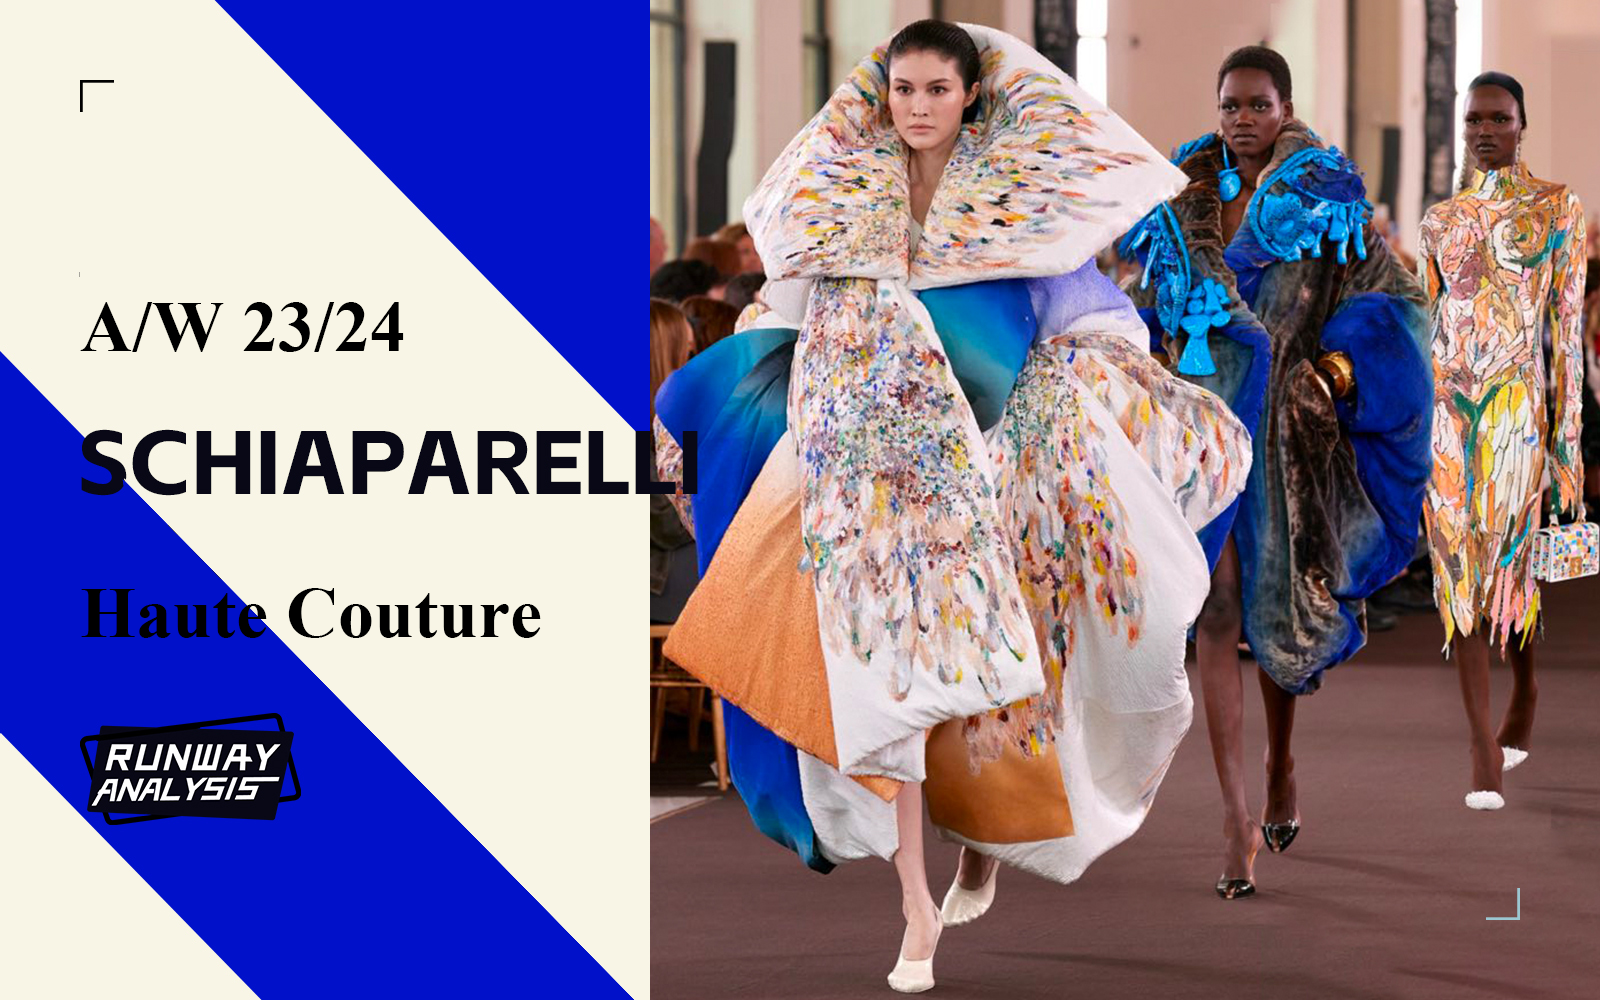 The Haute Couture Runway Analysis of Schiaparelli